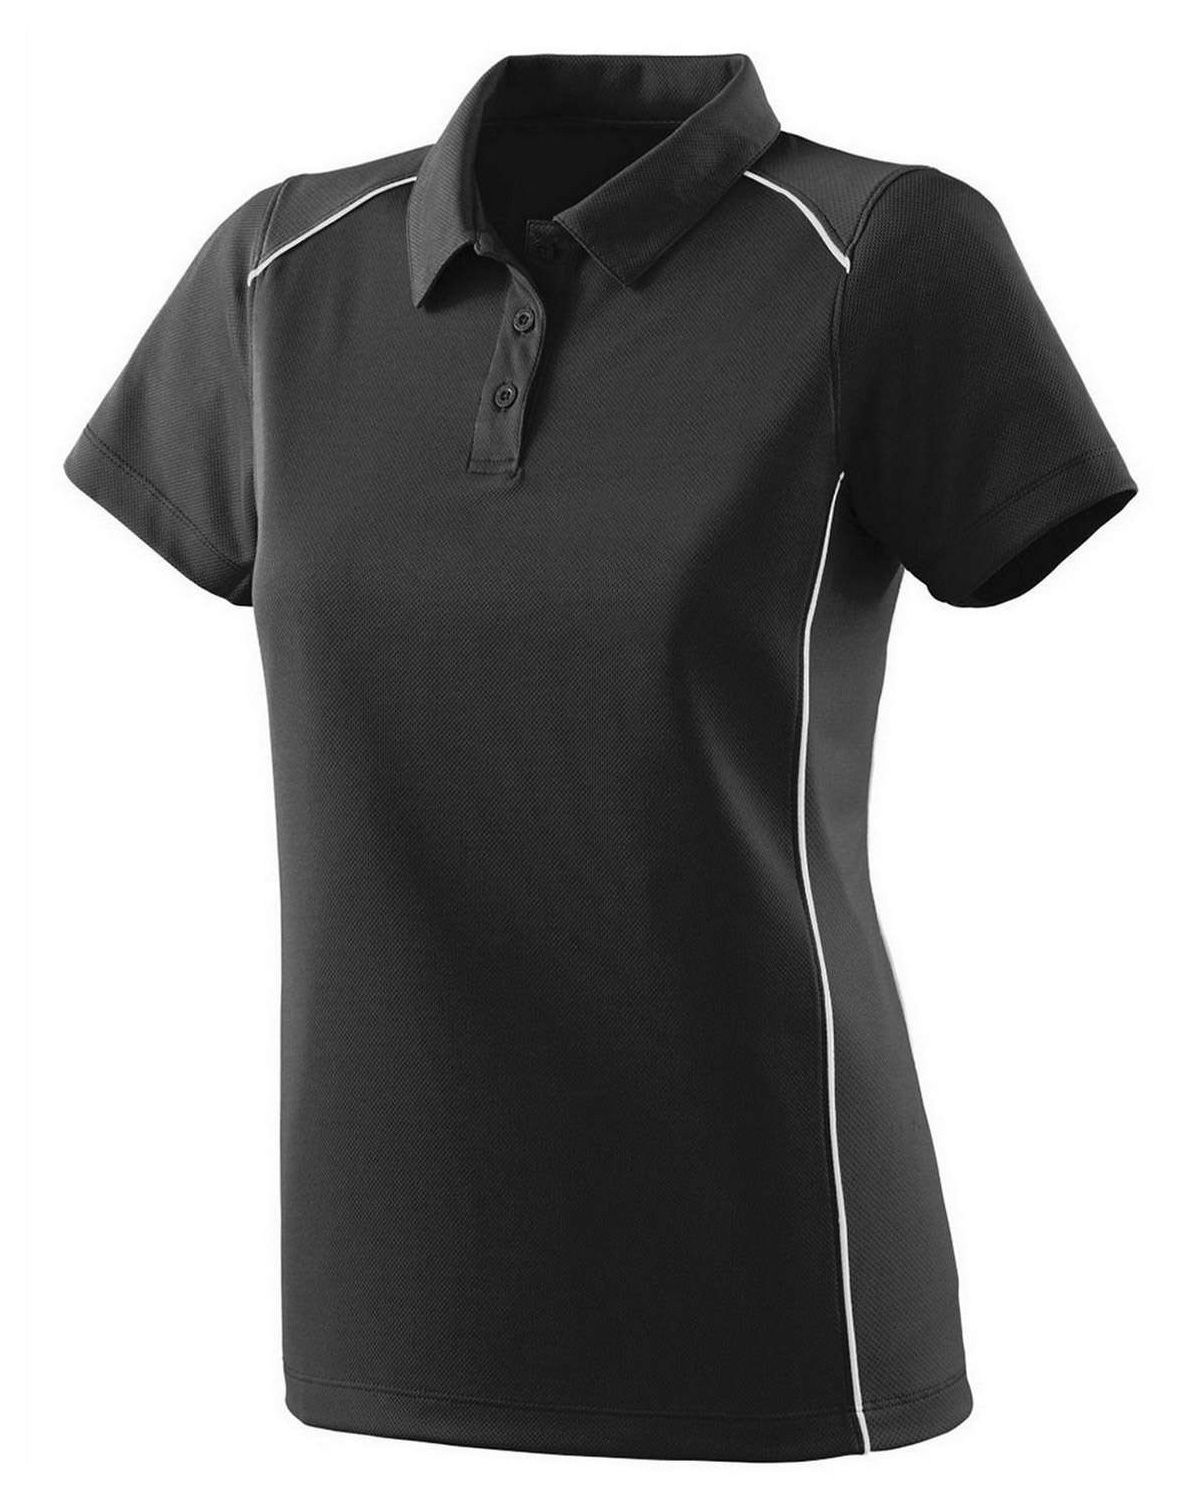 Augusta Sportswear 5092 Women's Wicking Polyester Sport Shirt